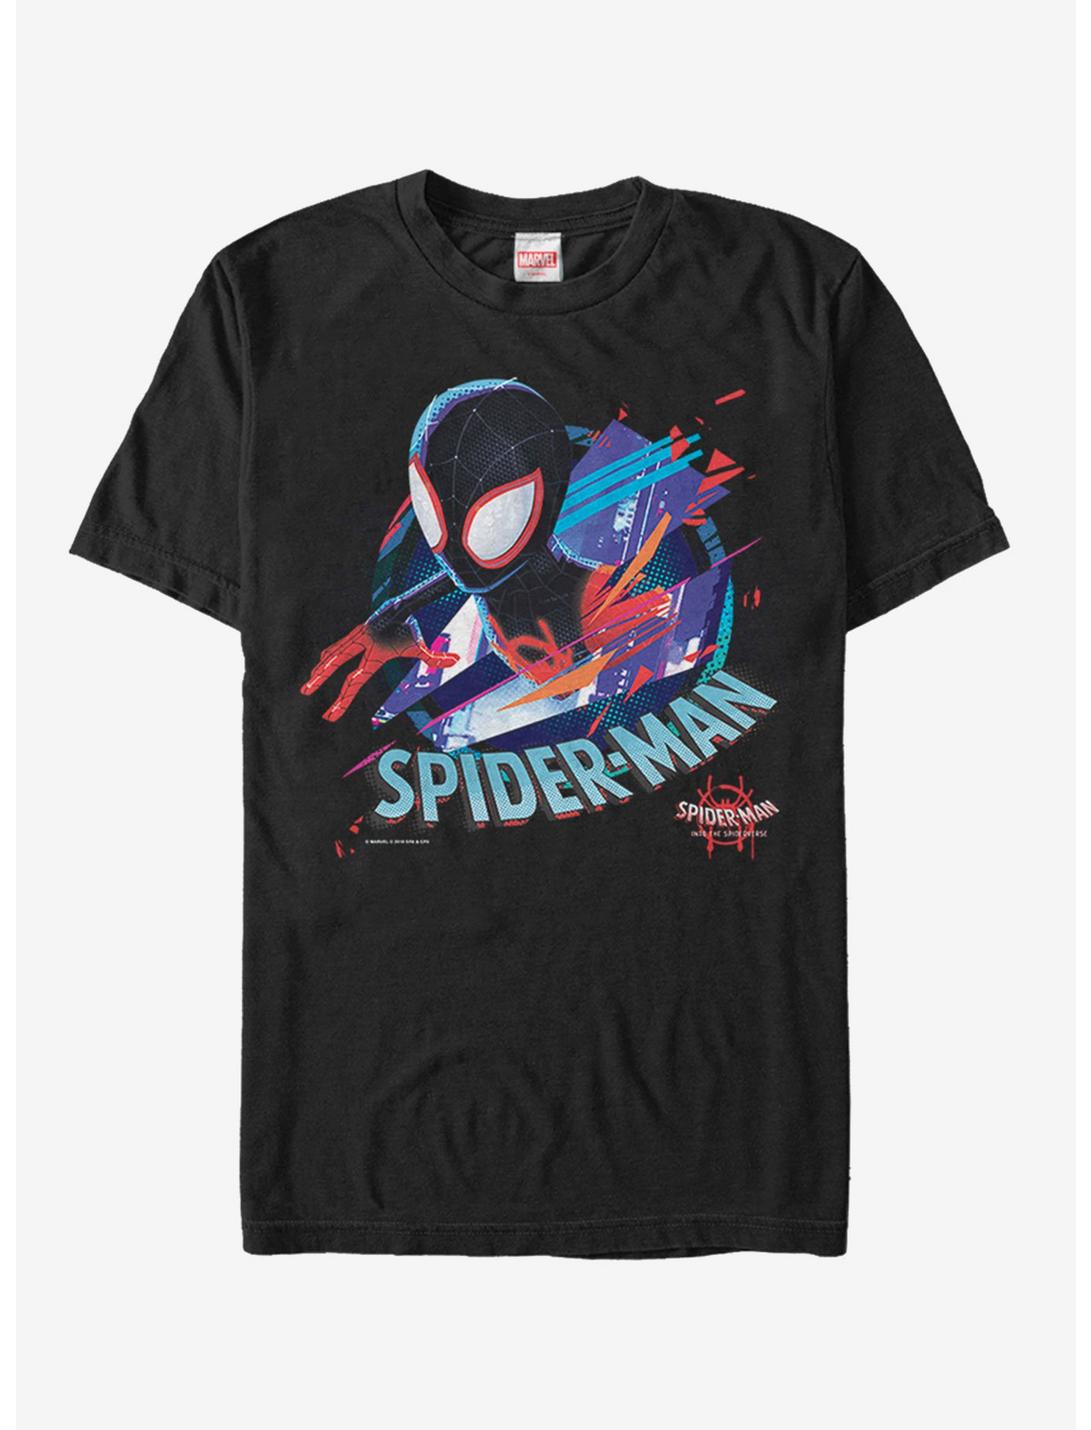 Marvel Spider-Man Spider-Verse Cracked Spider T-Shirt, BLACK, hi-res